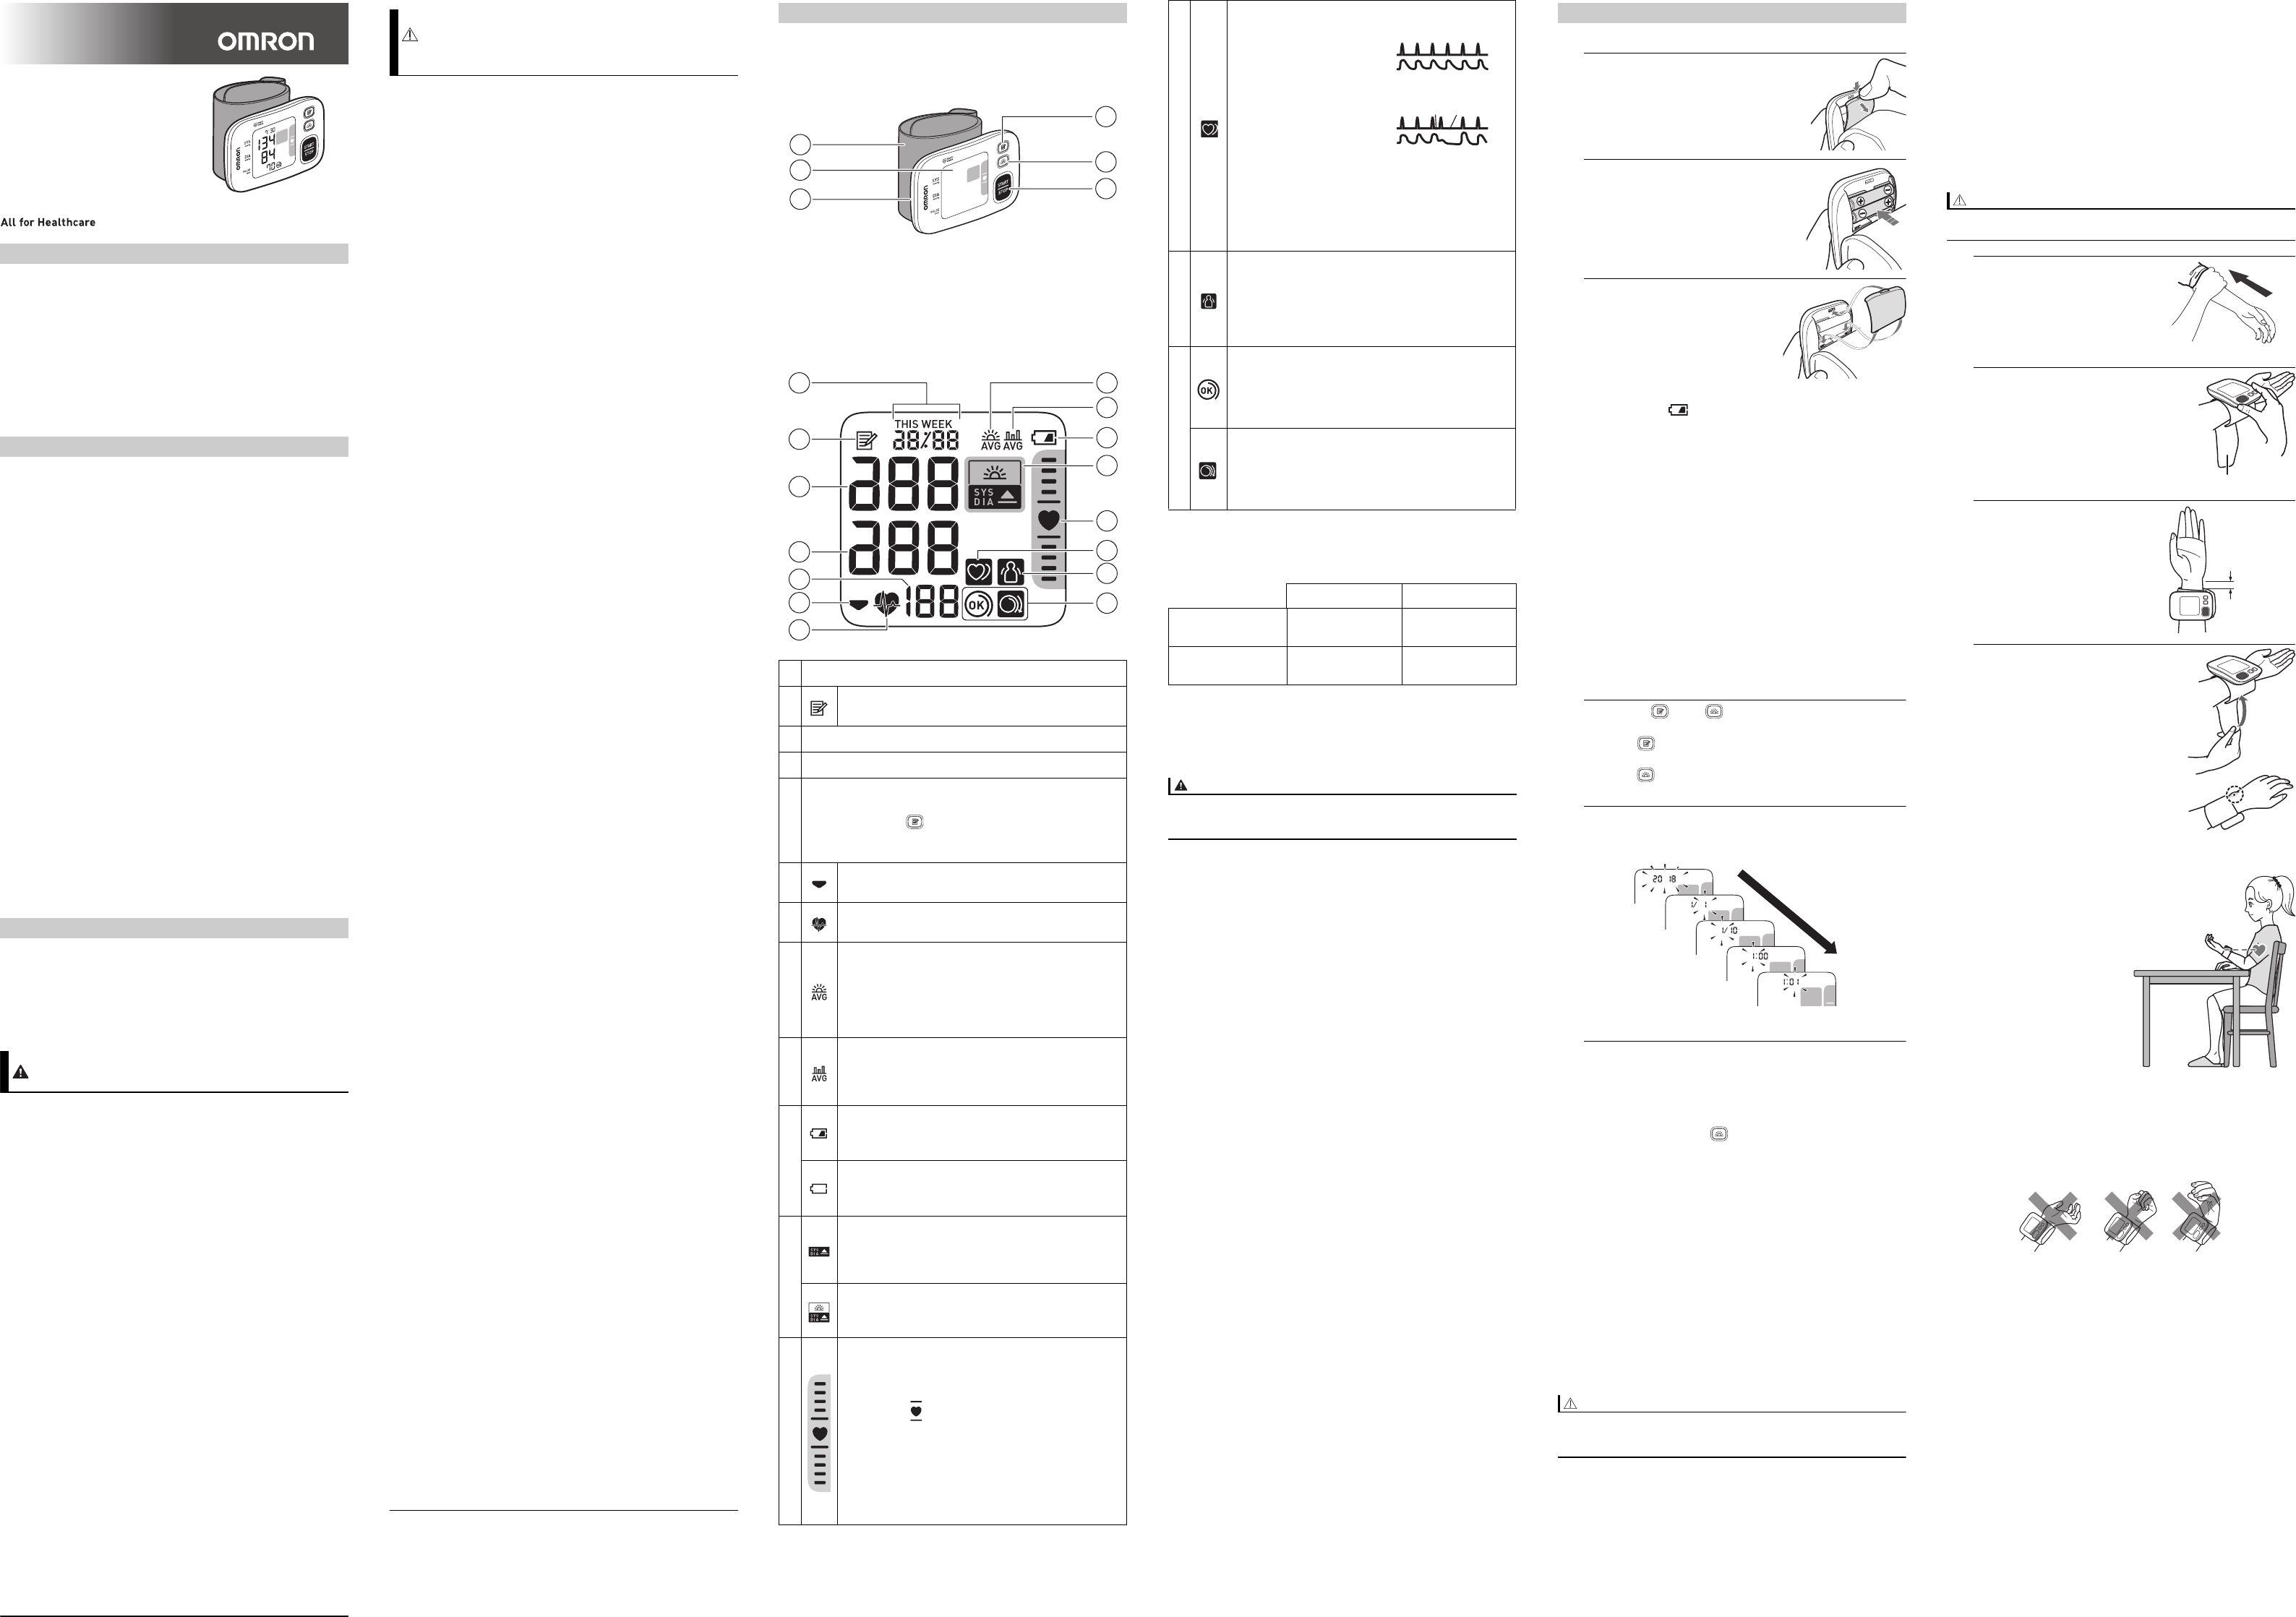 Handleiding Omron RS4 - HEM-6181-D (pagina 1 van 2) (Duits)